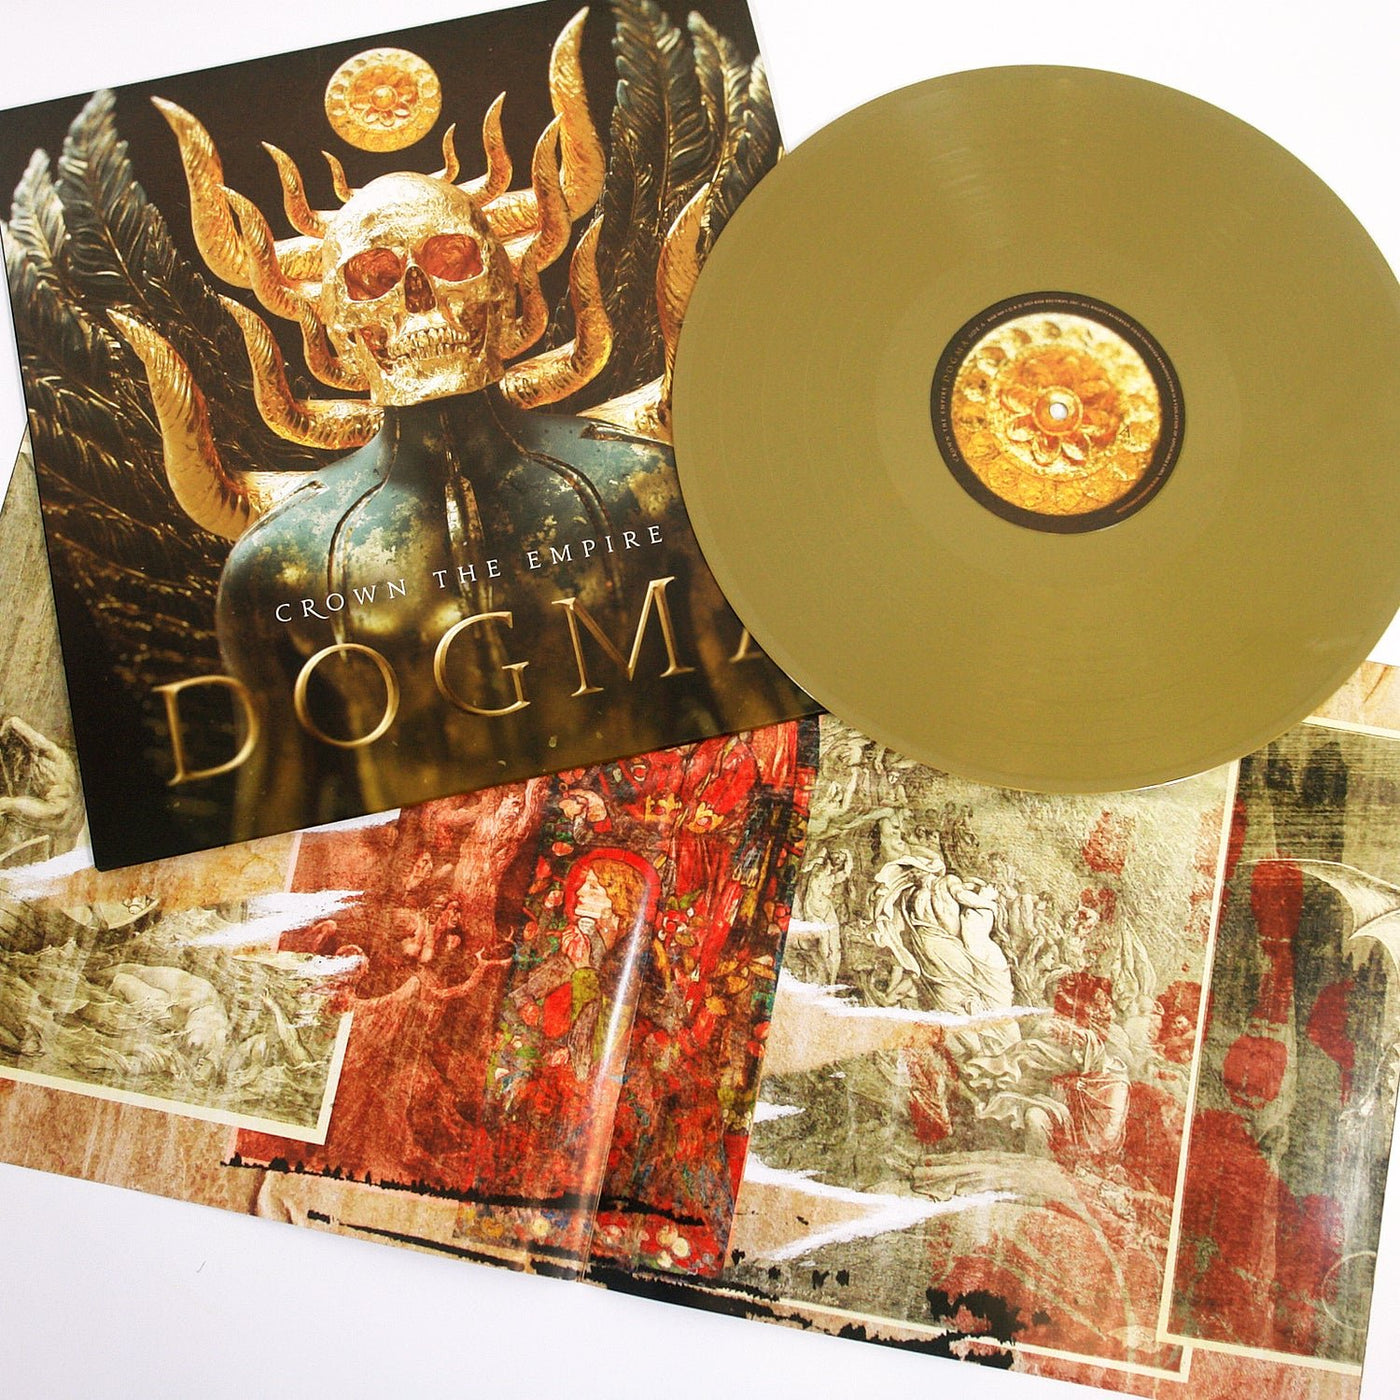 DOGMA Gold Vinyl LP